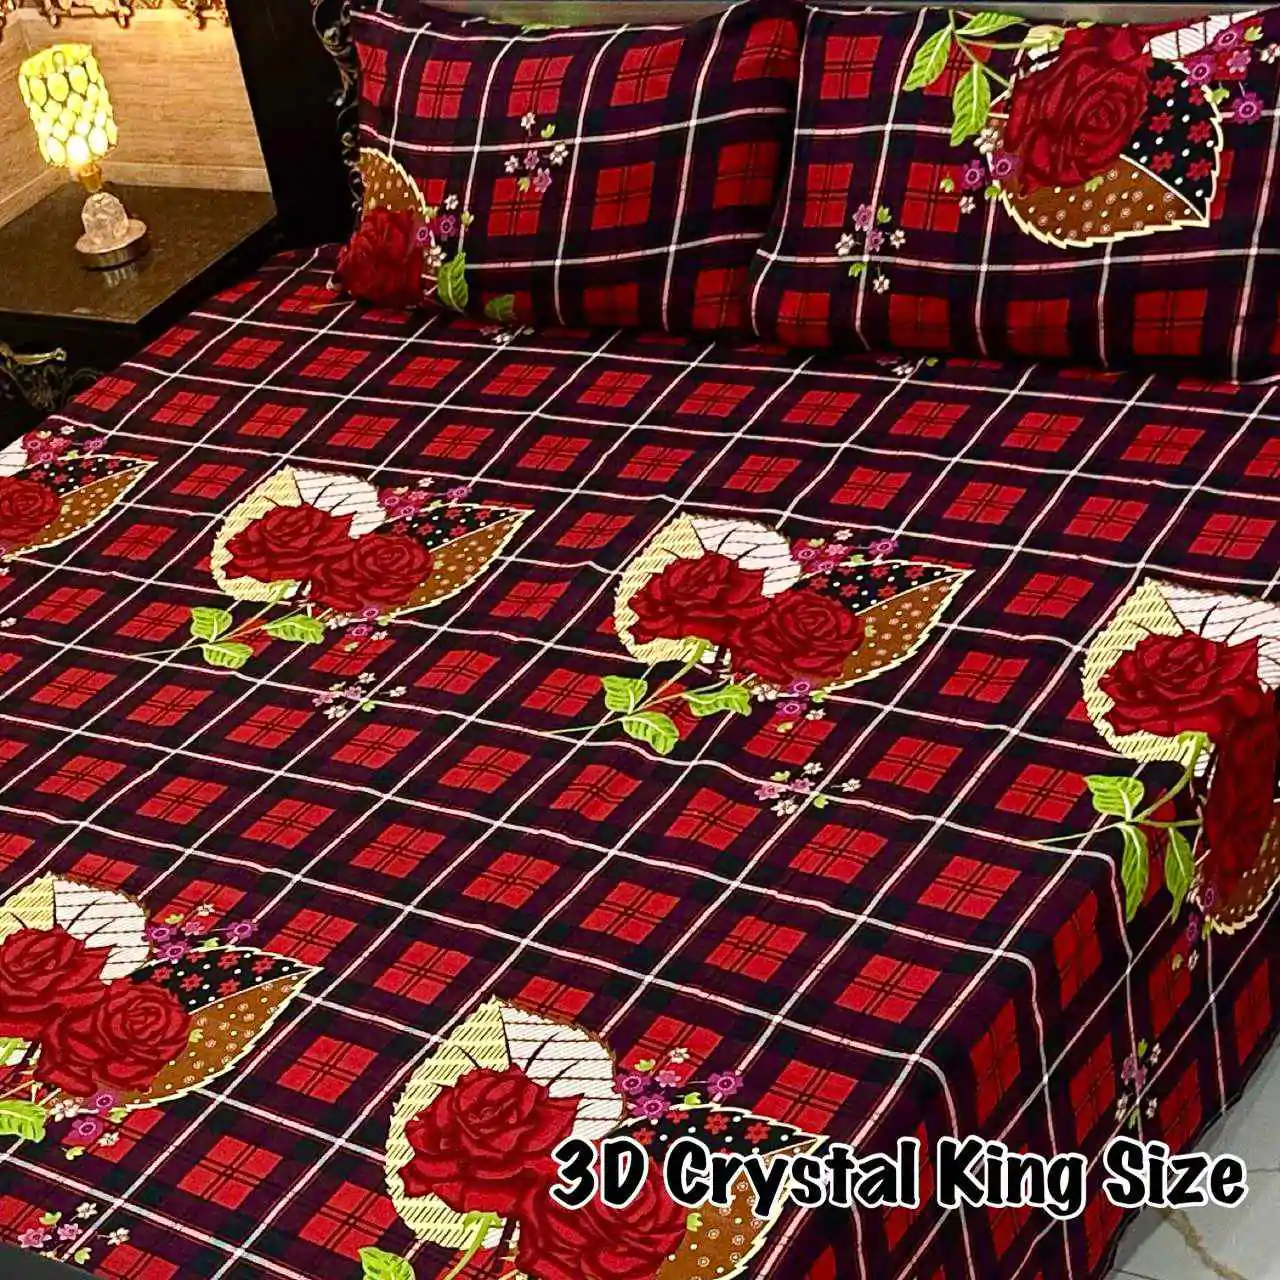 DF-CBSKS-11: DFY Bedding 3D Crystal Bed Sheet King Size